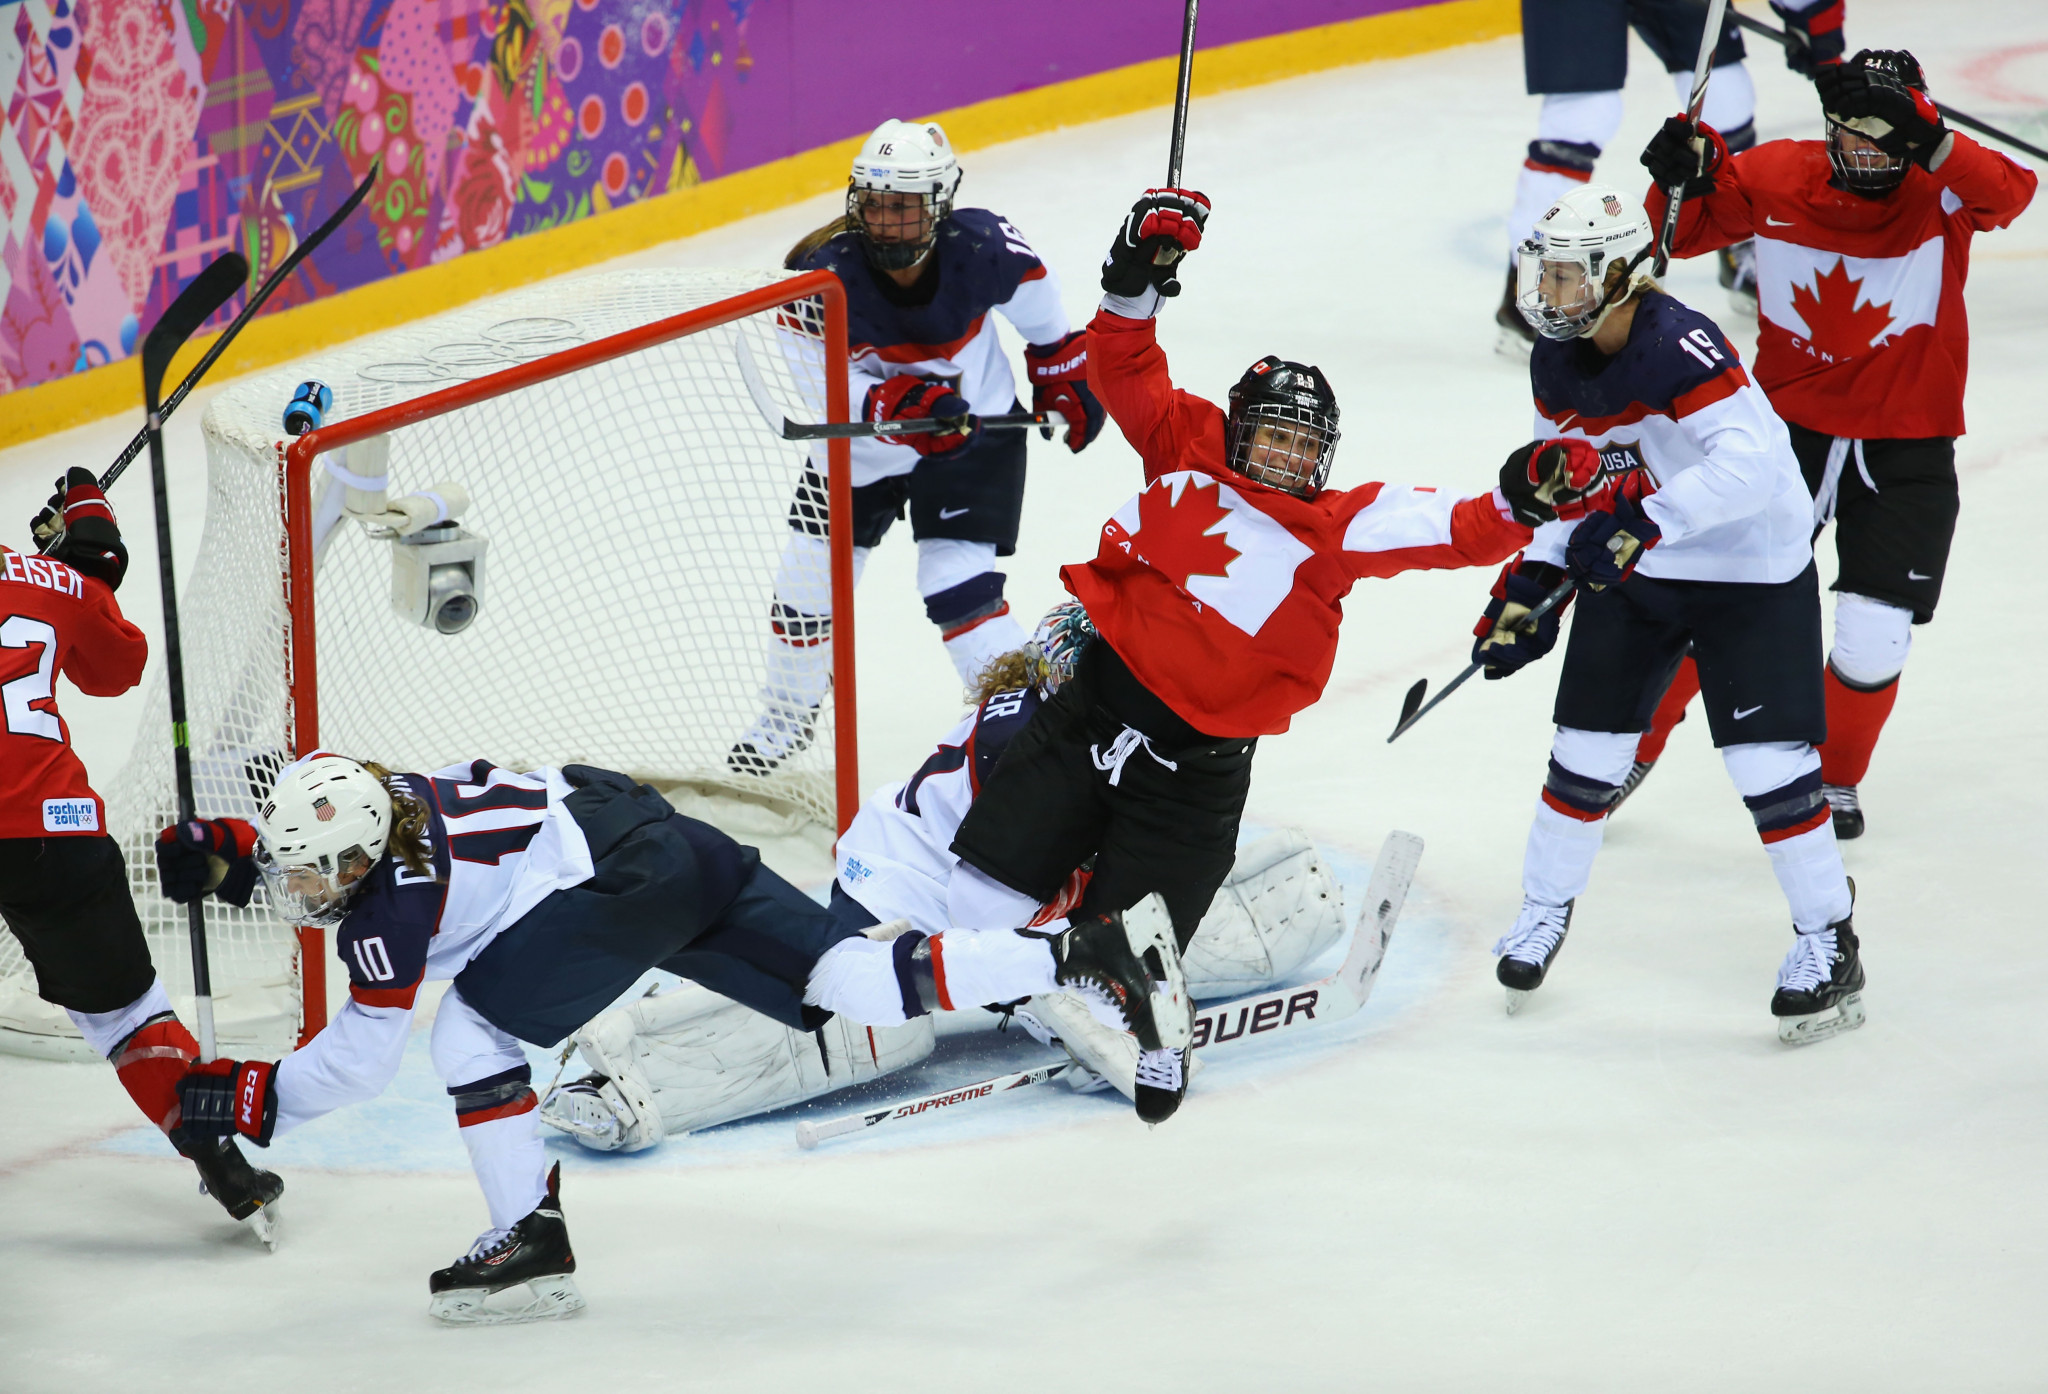 Defending champions Canada name ice hockey team for Pyeongchang 2018